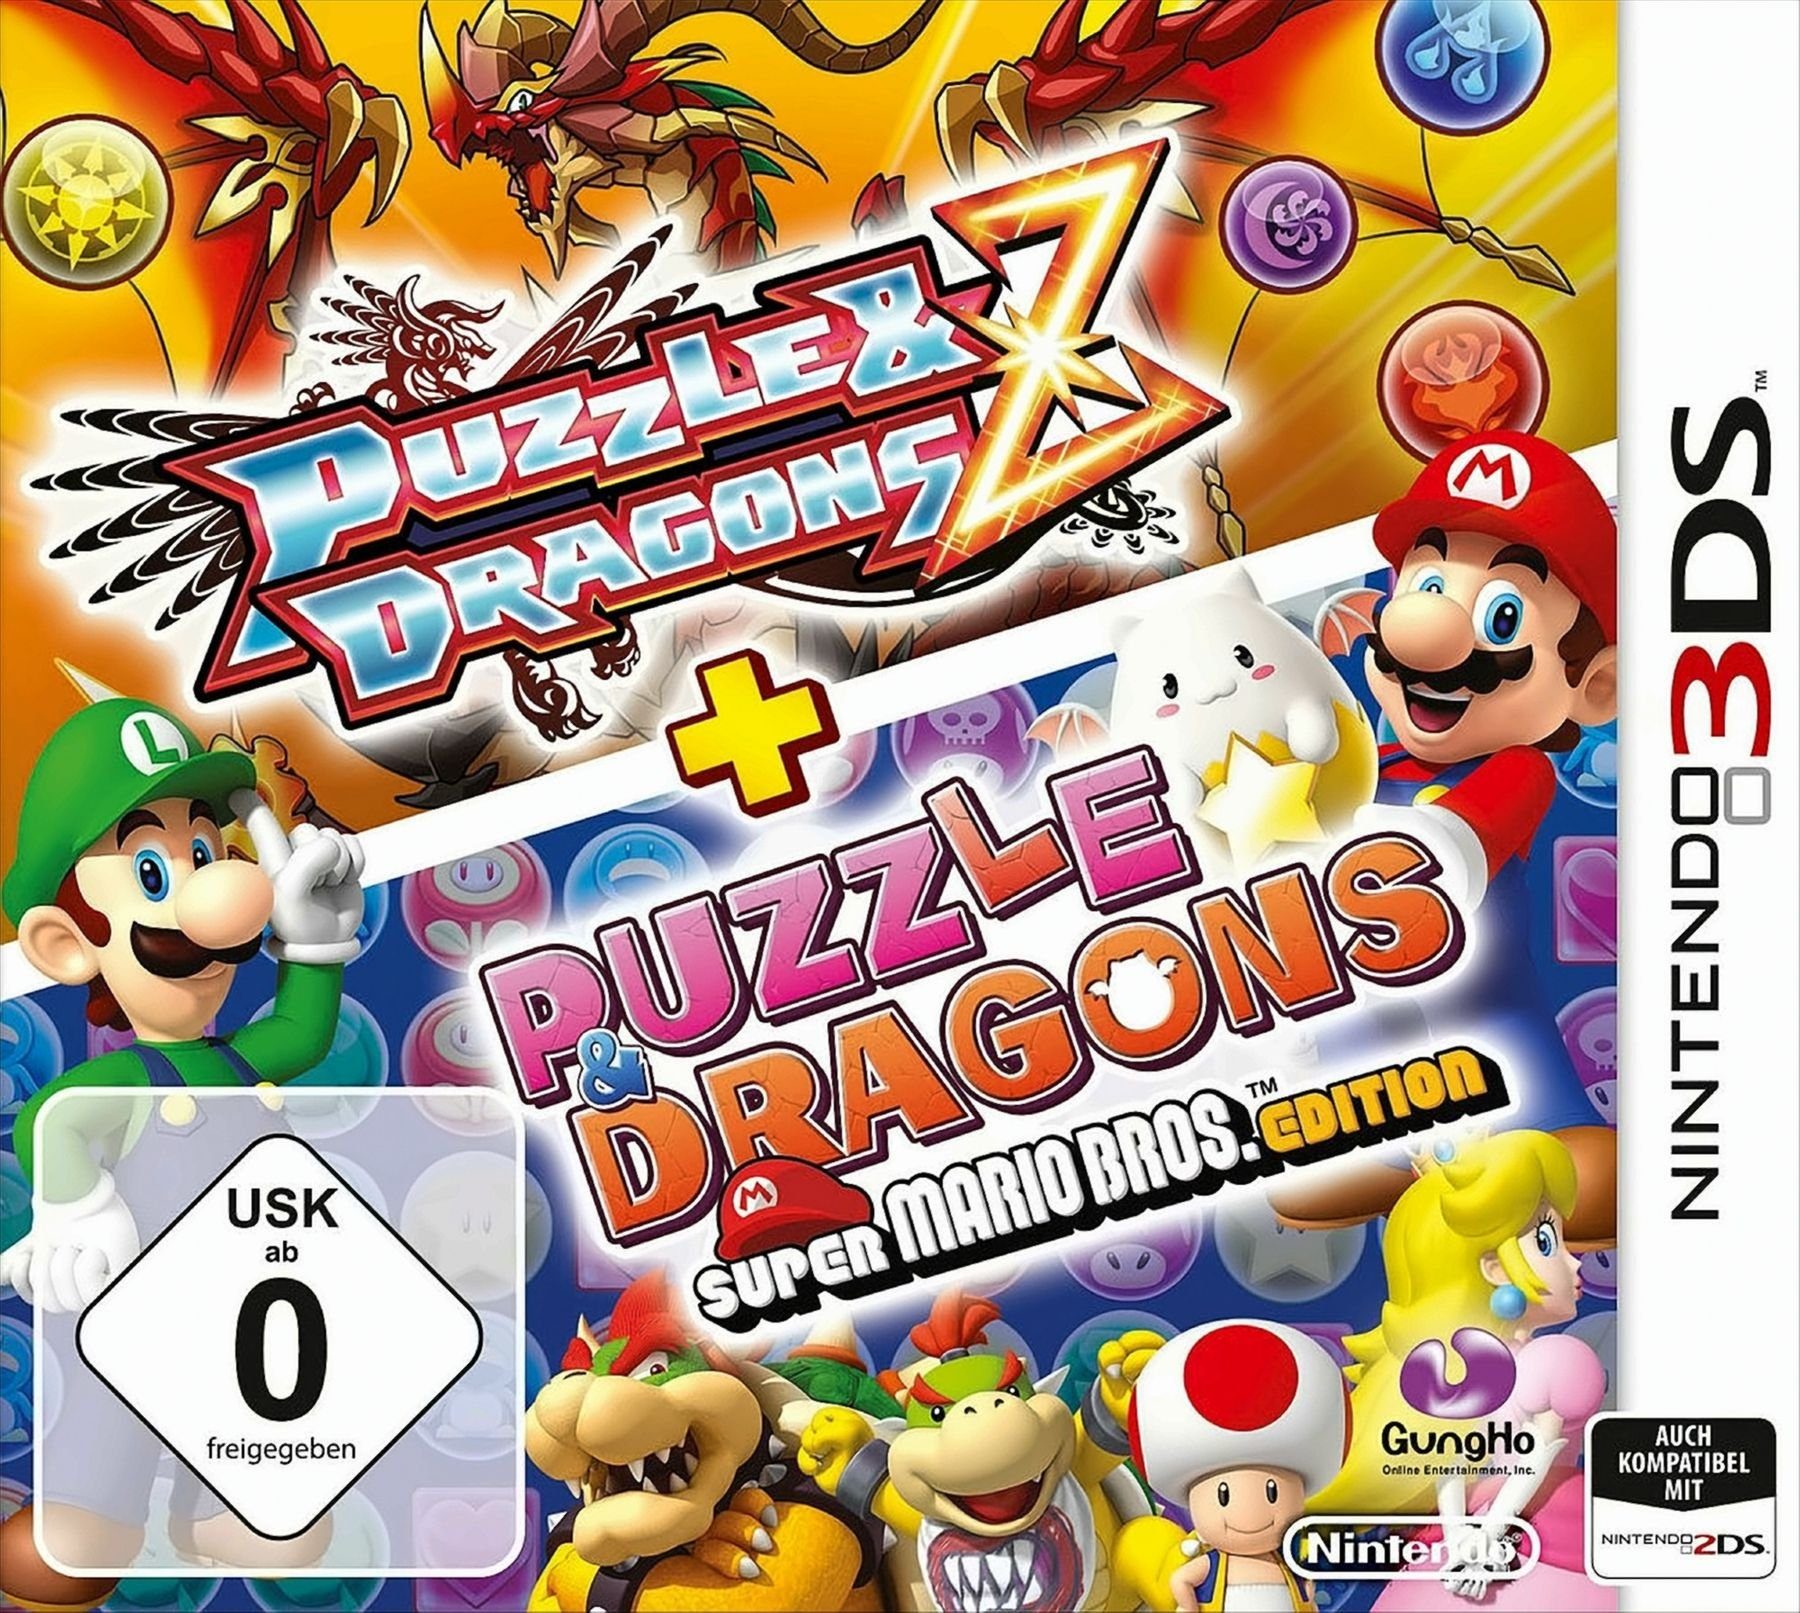 Puzzle & Dragons: Super Mario Bros. Edition is Coming to Nintendo 3DS